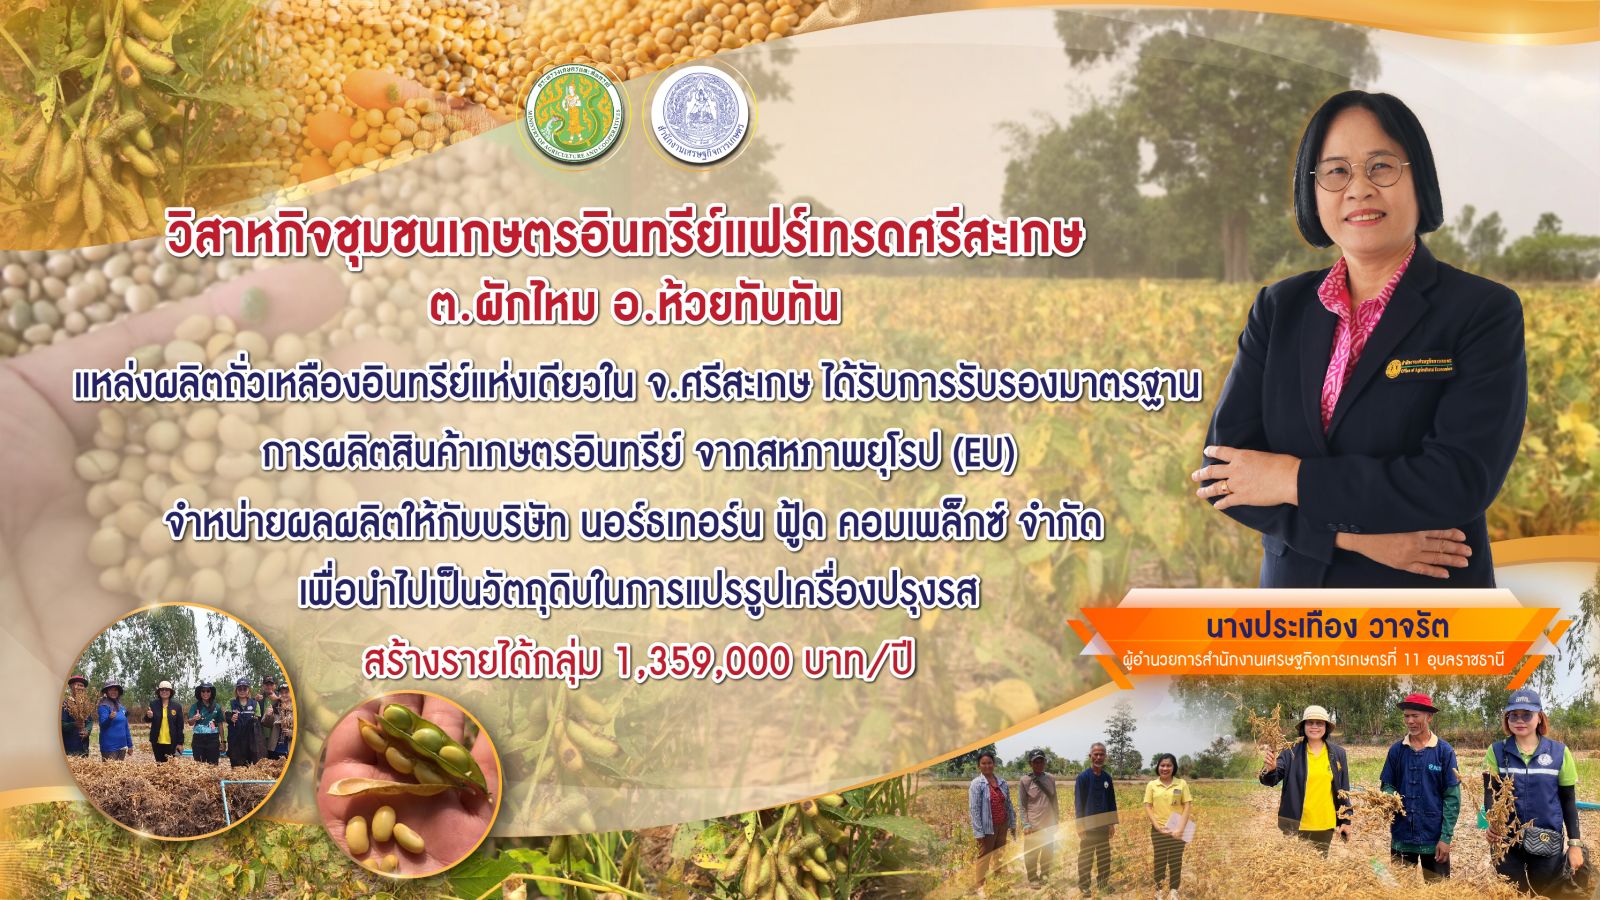 ‘Organic Fairtrade Sisaket Community Enterpris’ Generates over 1.35 million baht annually from organic soybeans